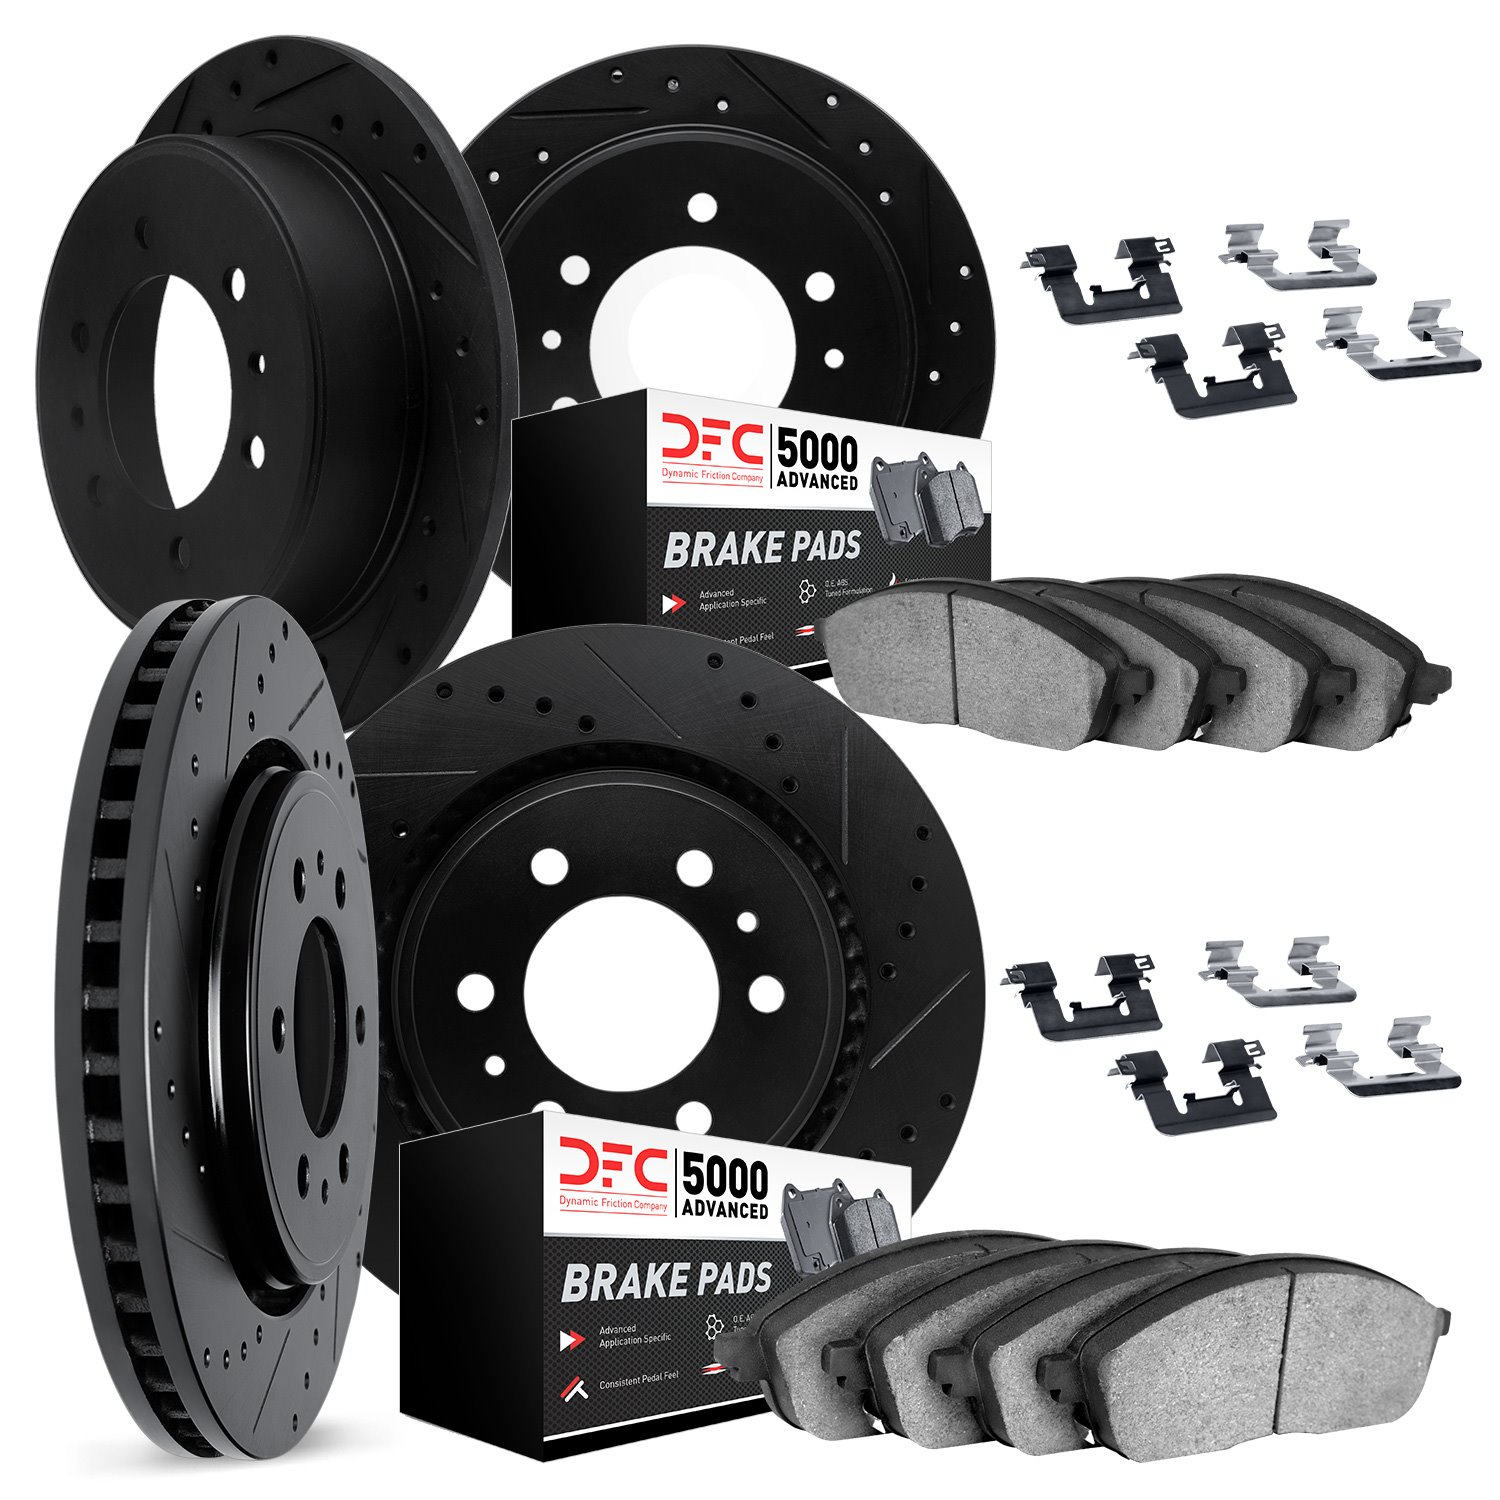 8514-40259 Drilled/Slotted Brake Rotors w/5000 Advanced Brake Pads Kit & Hardware [Black], 2007-2018 Multiple Makes/Models, Posi